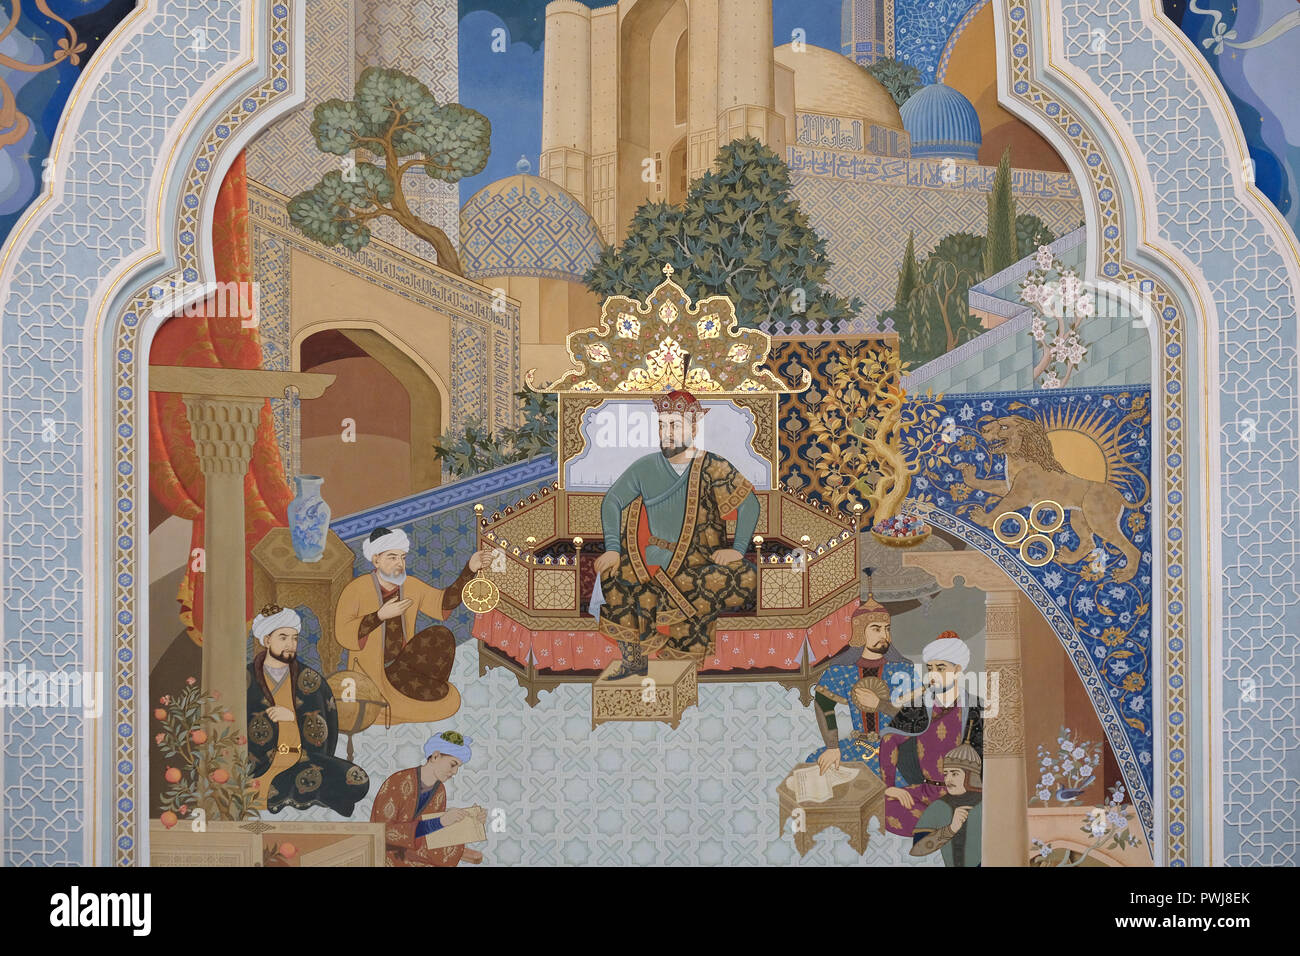 A painted panel showing different scenes of Mongol warlord Amir Timur (Tamerlane) inside Amir Timur Museum in Tashkent, capital of Uzbekistan Stock Photo